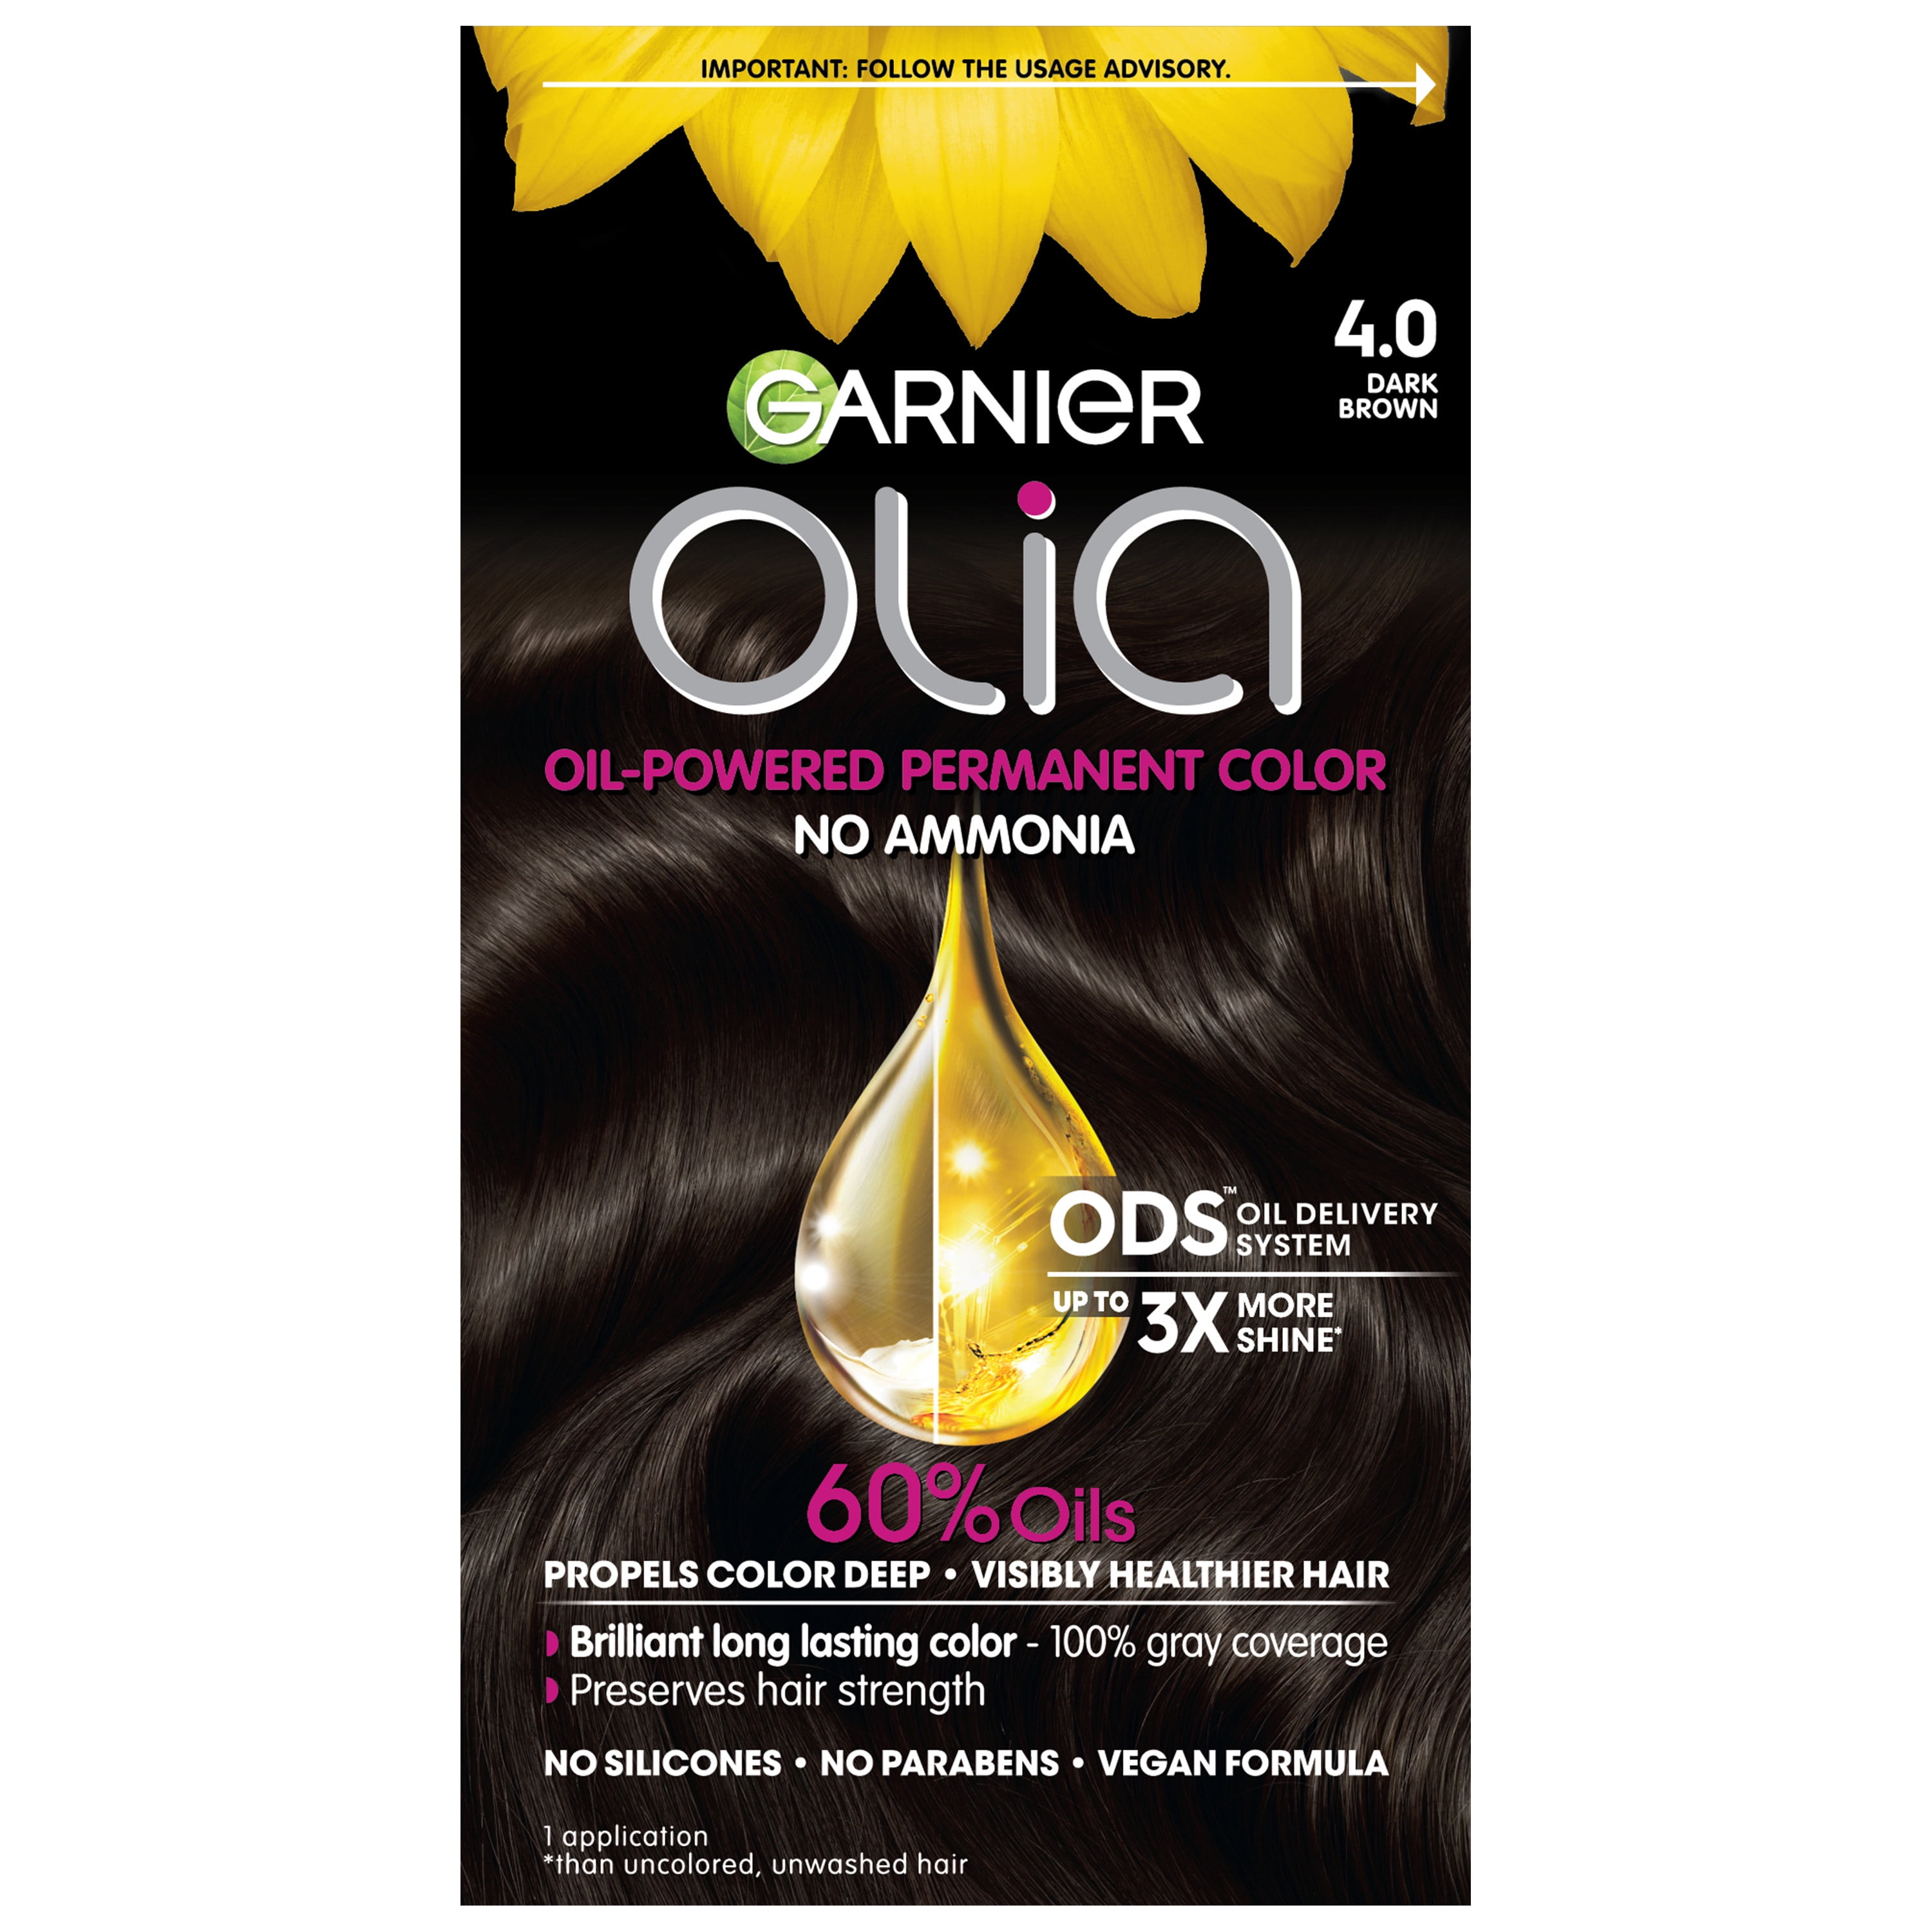 Garnier Olia Oil Powered Ammonia Free Permanent Hair Color, 4.0 Dark Brown, 1 kit